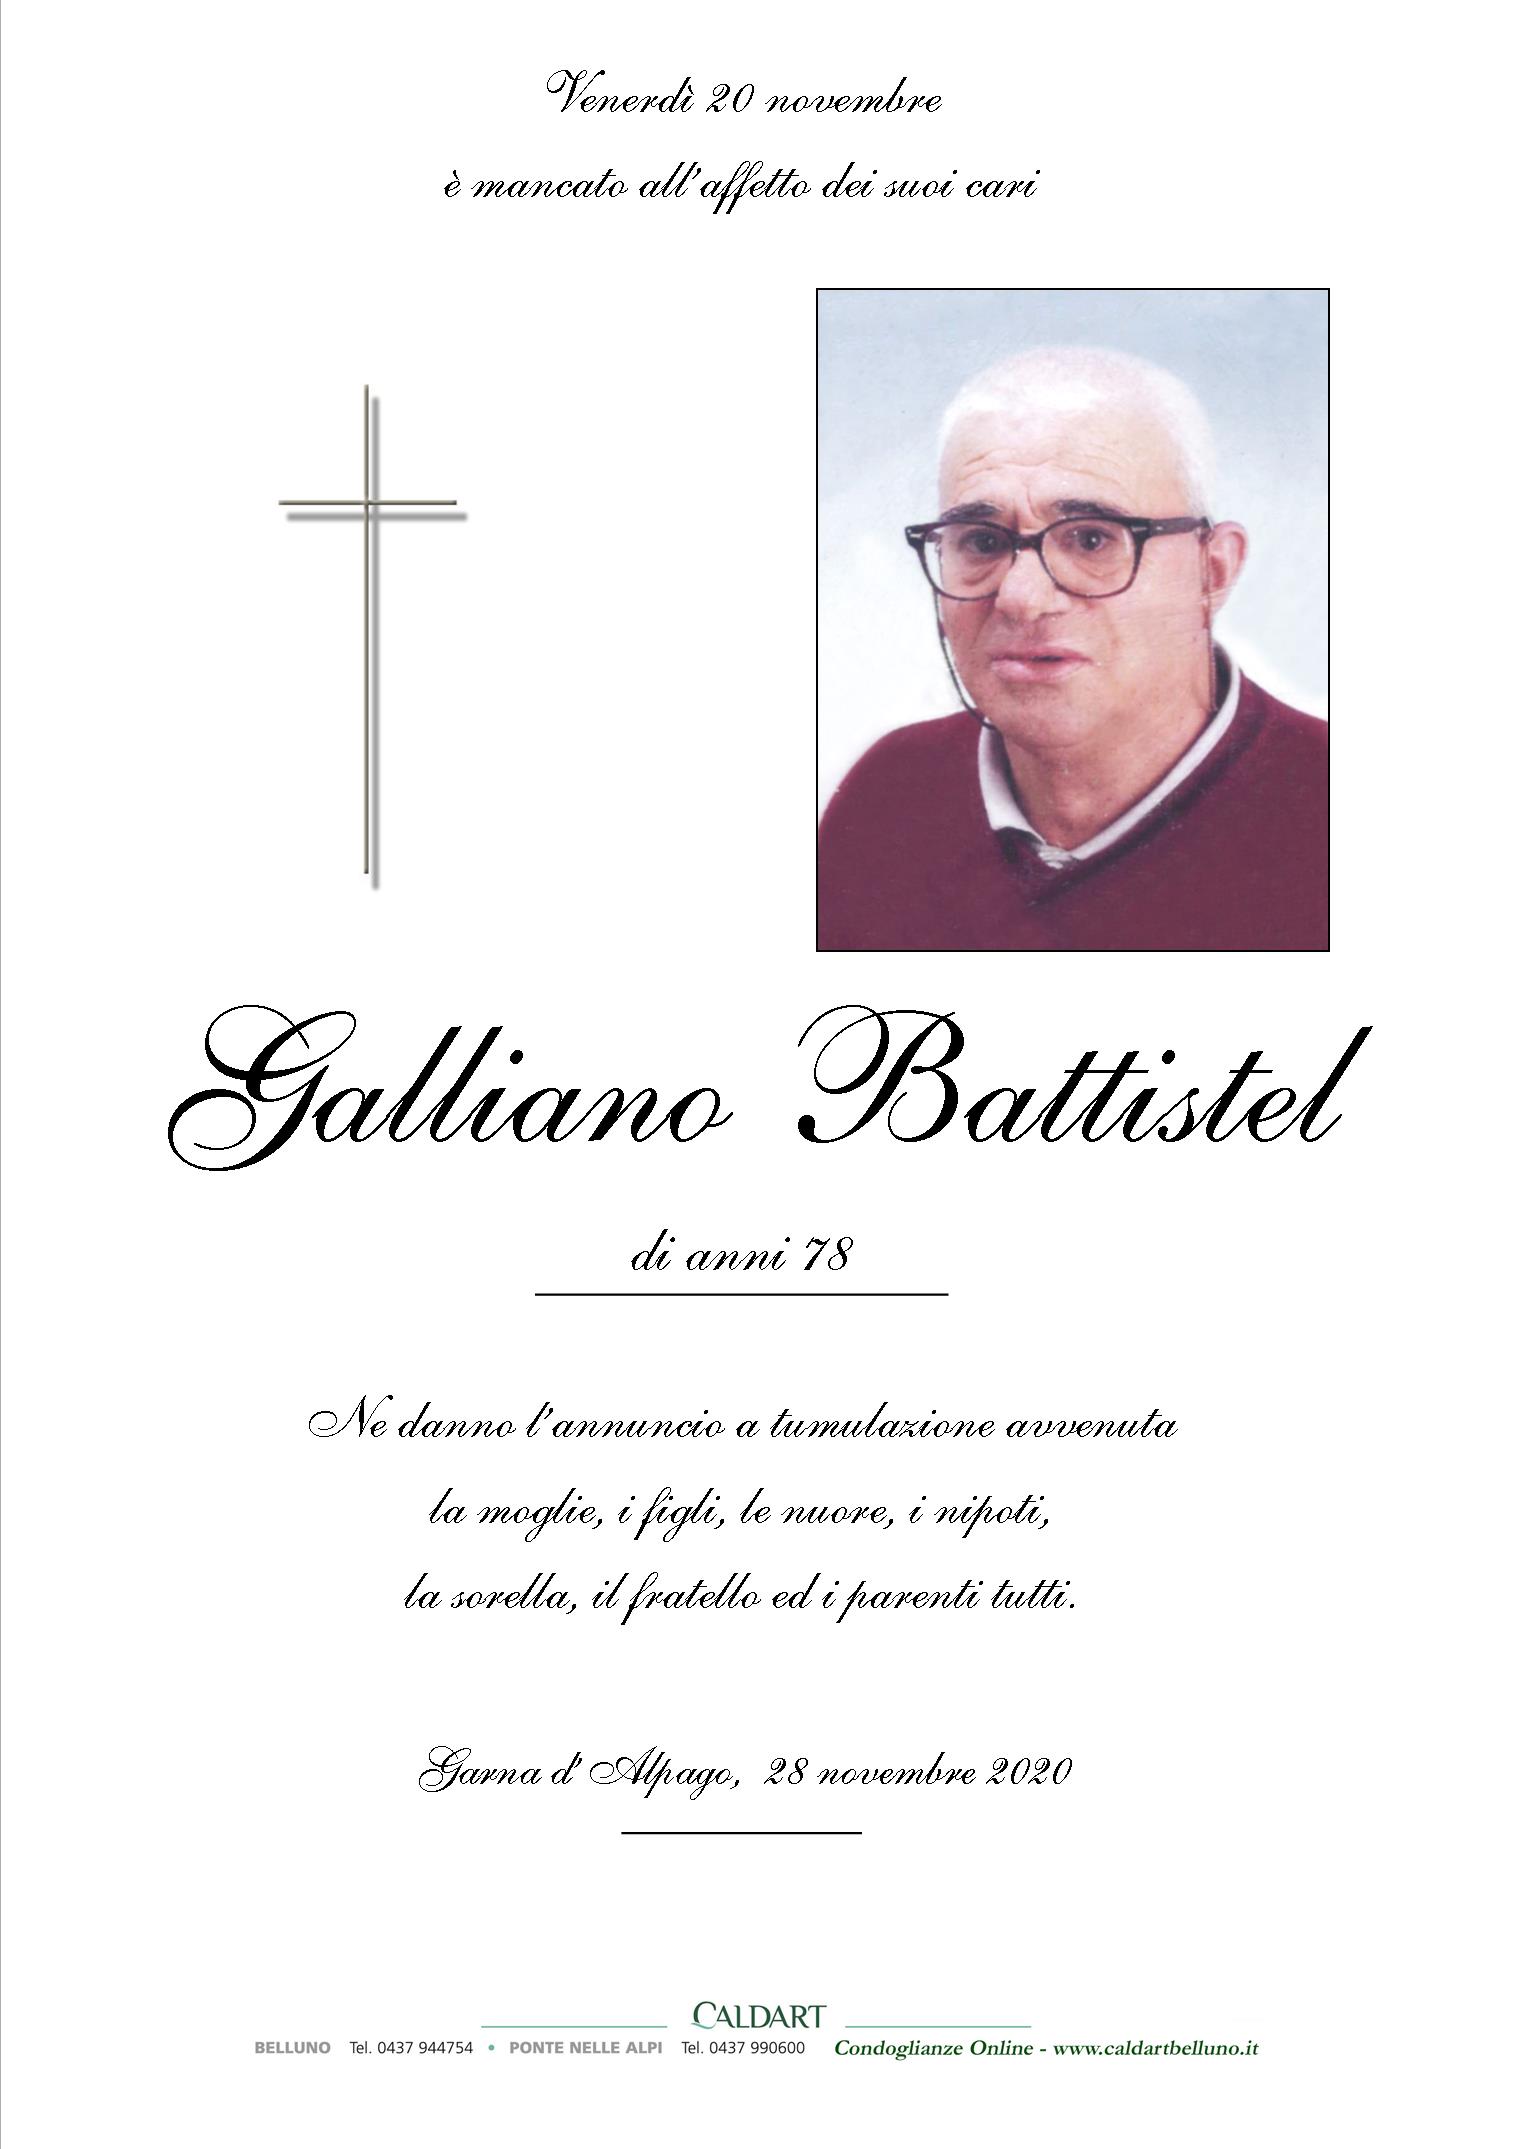 Battistel Galliano